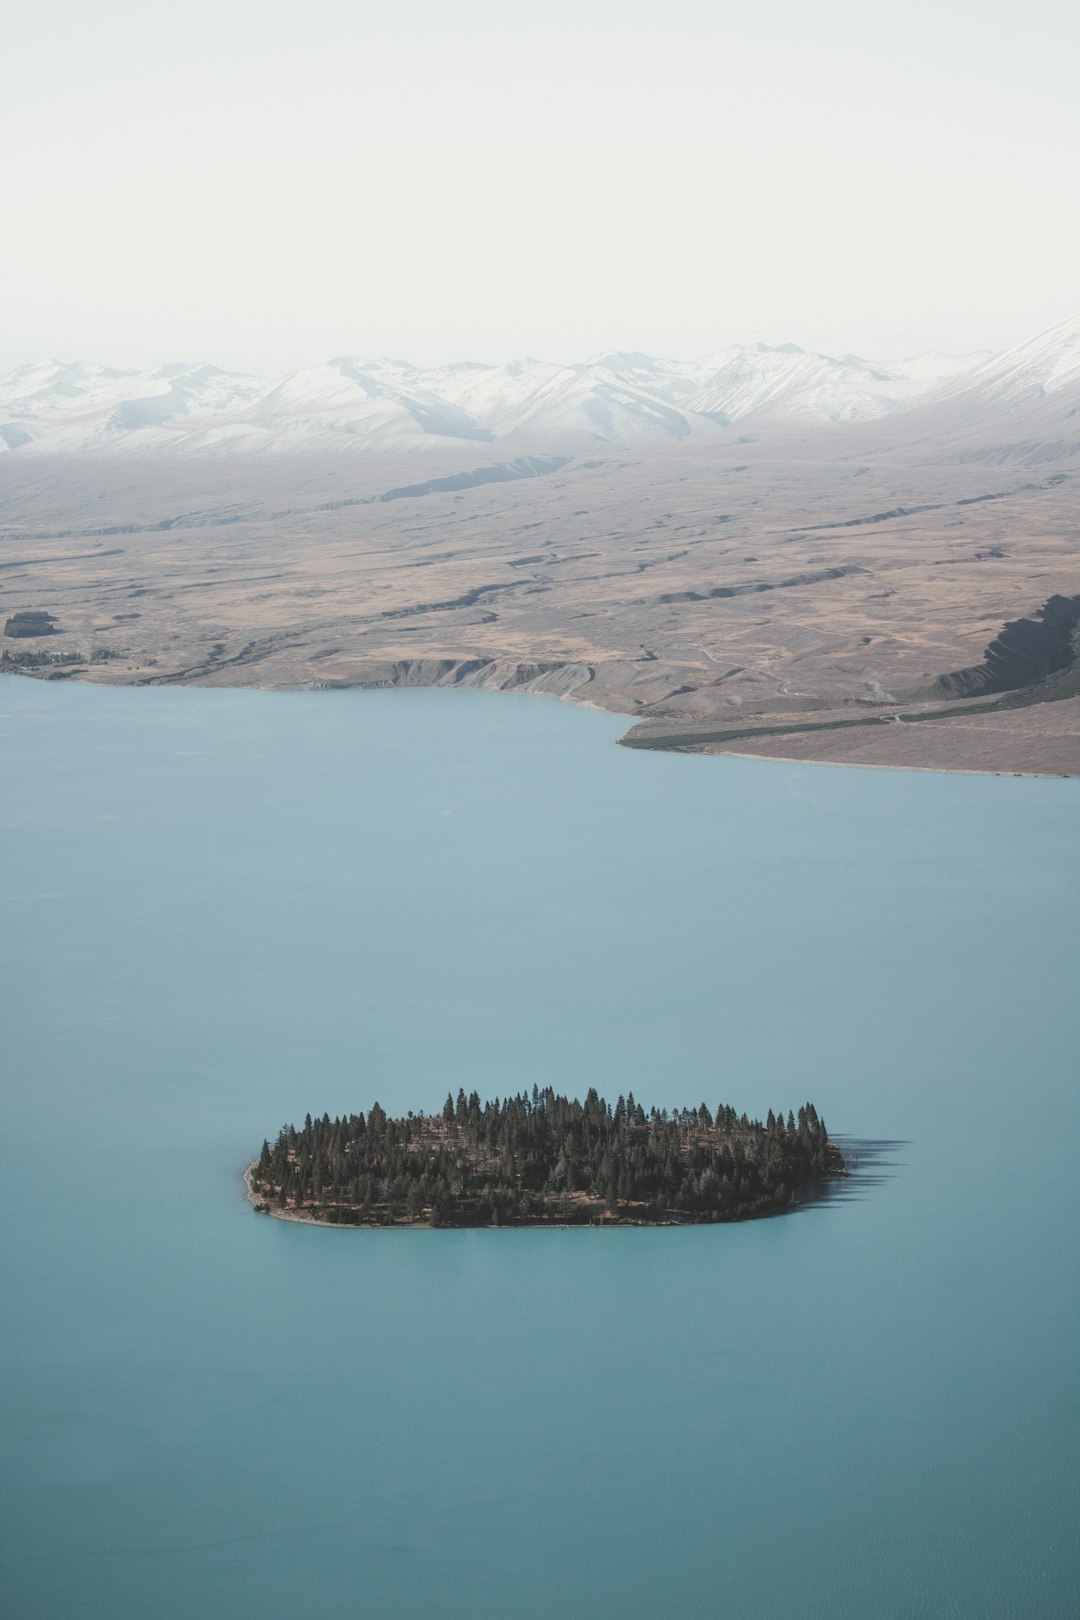 Travel Tips and Stories of Lake Tekapo in New Zealand